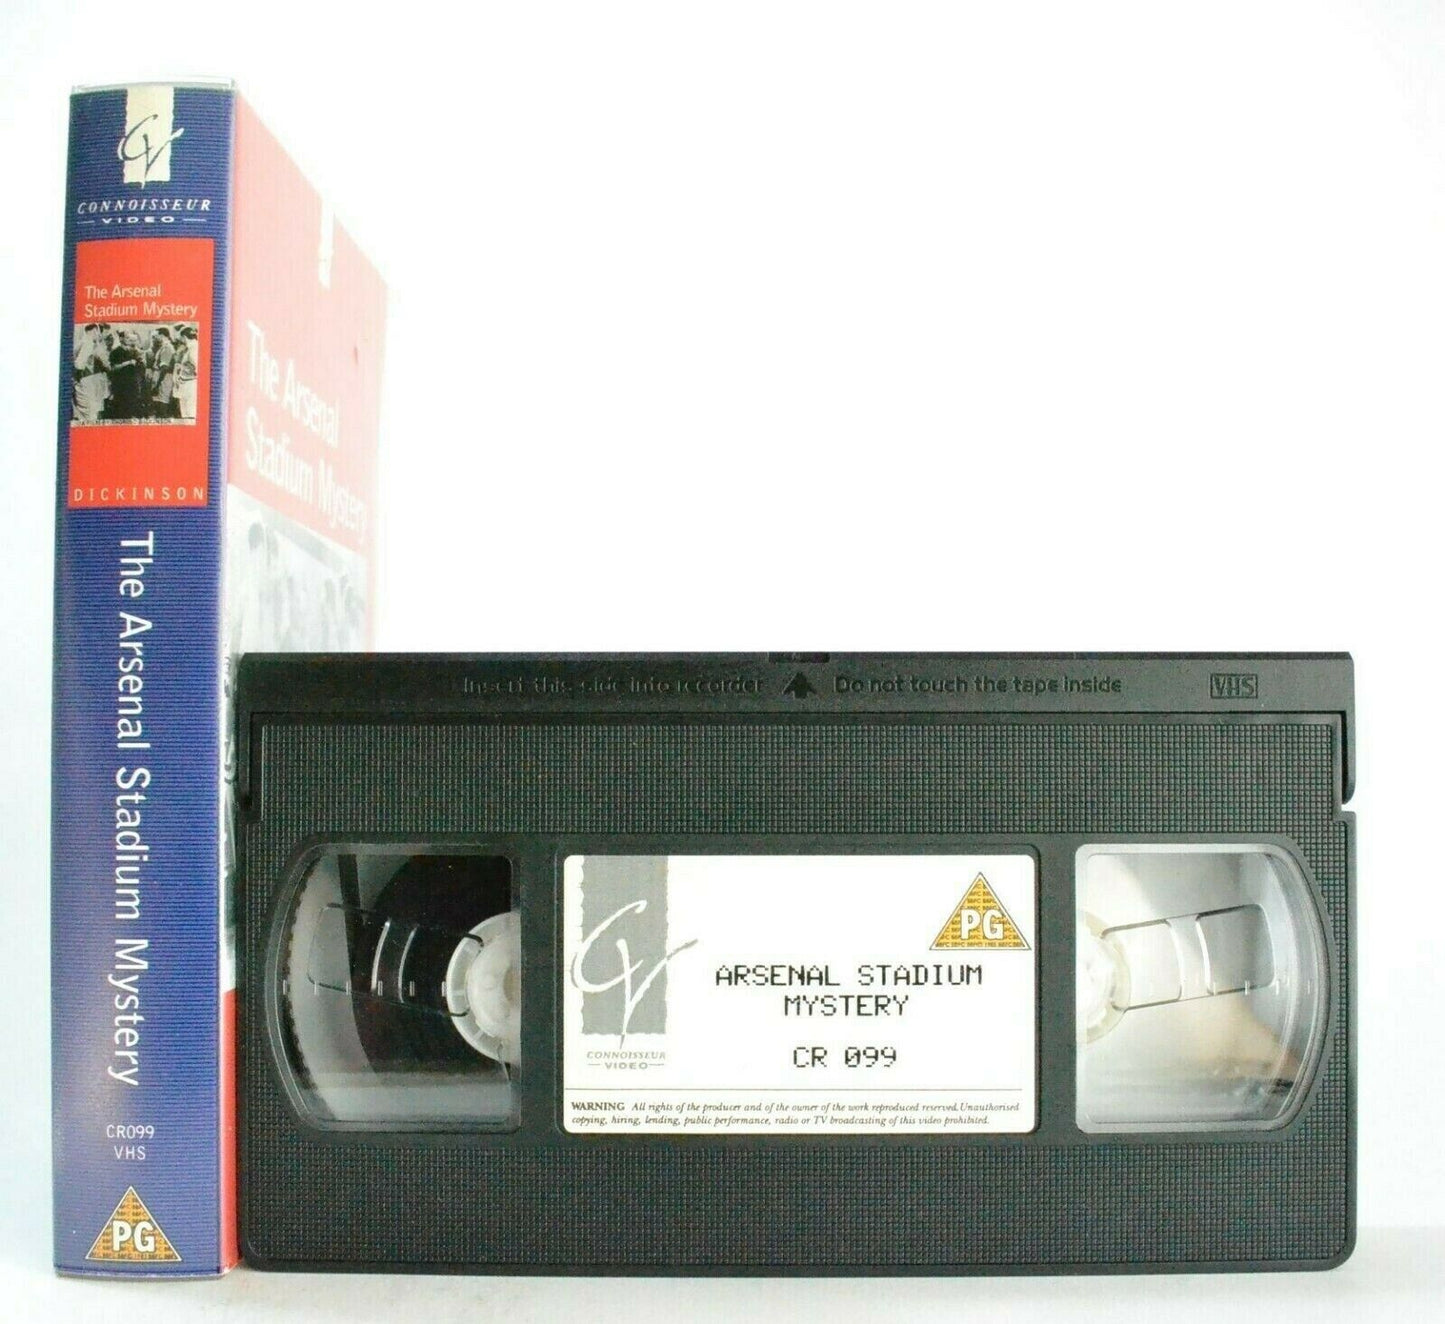 The Arsenal Stadium Mystery: A Thorold Dickinson Film - Football - Sports - VHS-